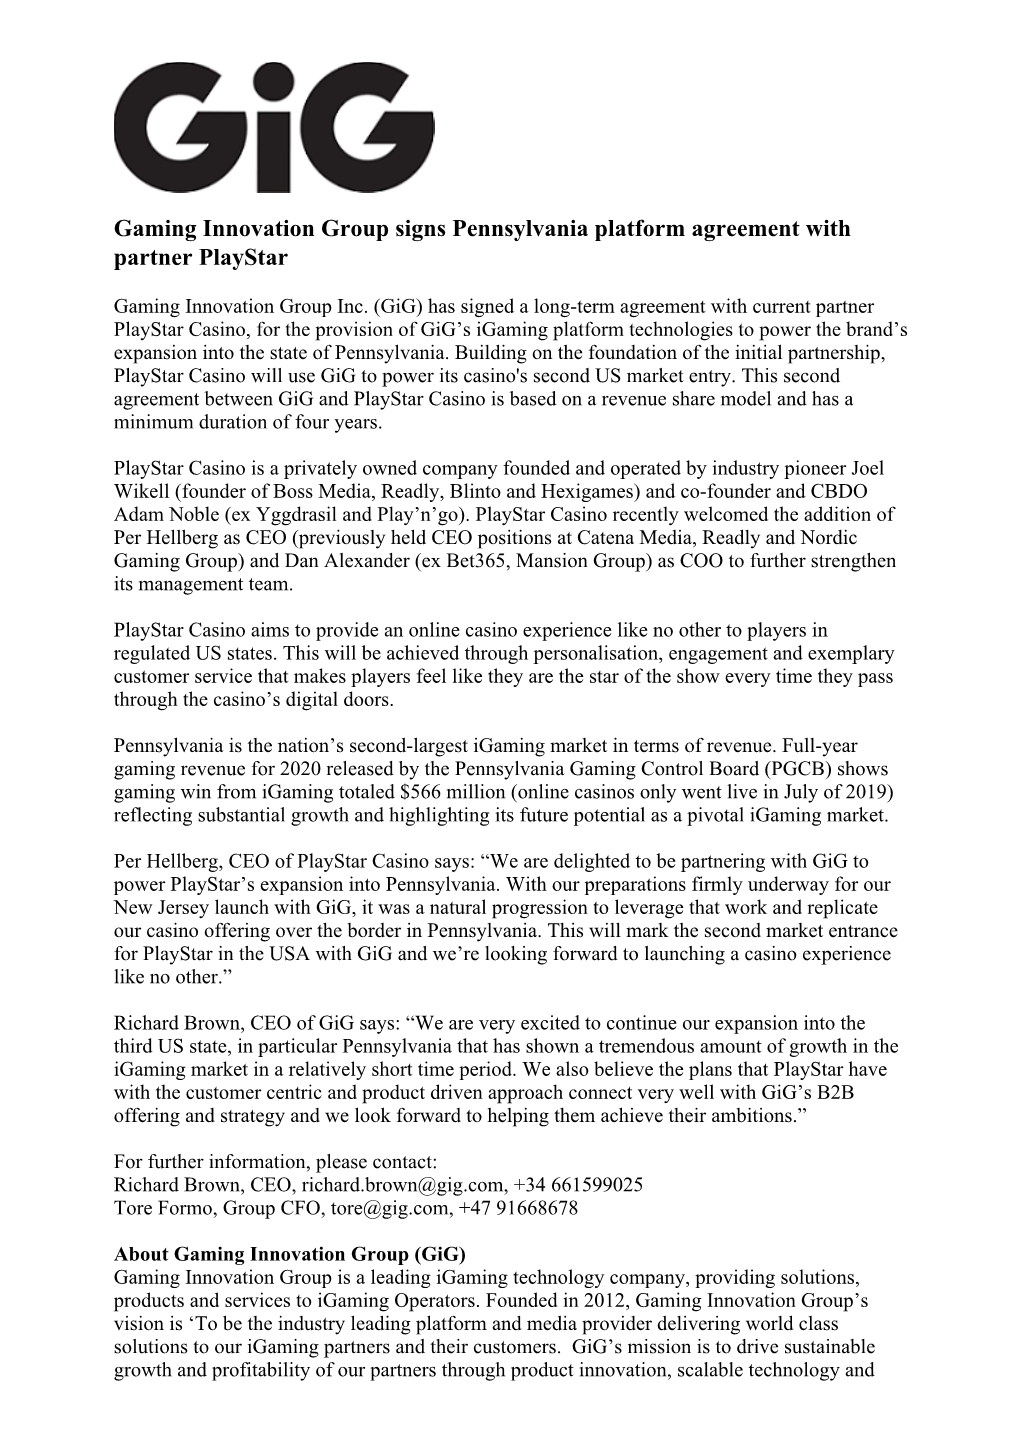 Gaming Innovation Group Signs Pennsylvania Platform Agreement with Partner Playstar